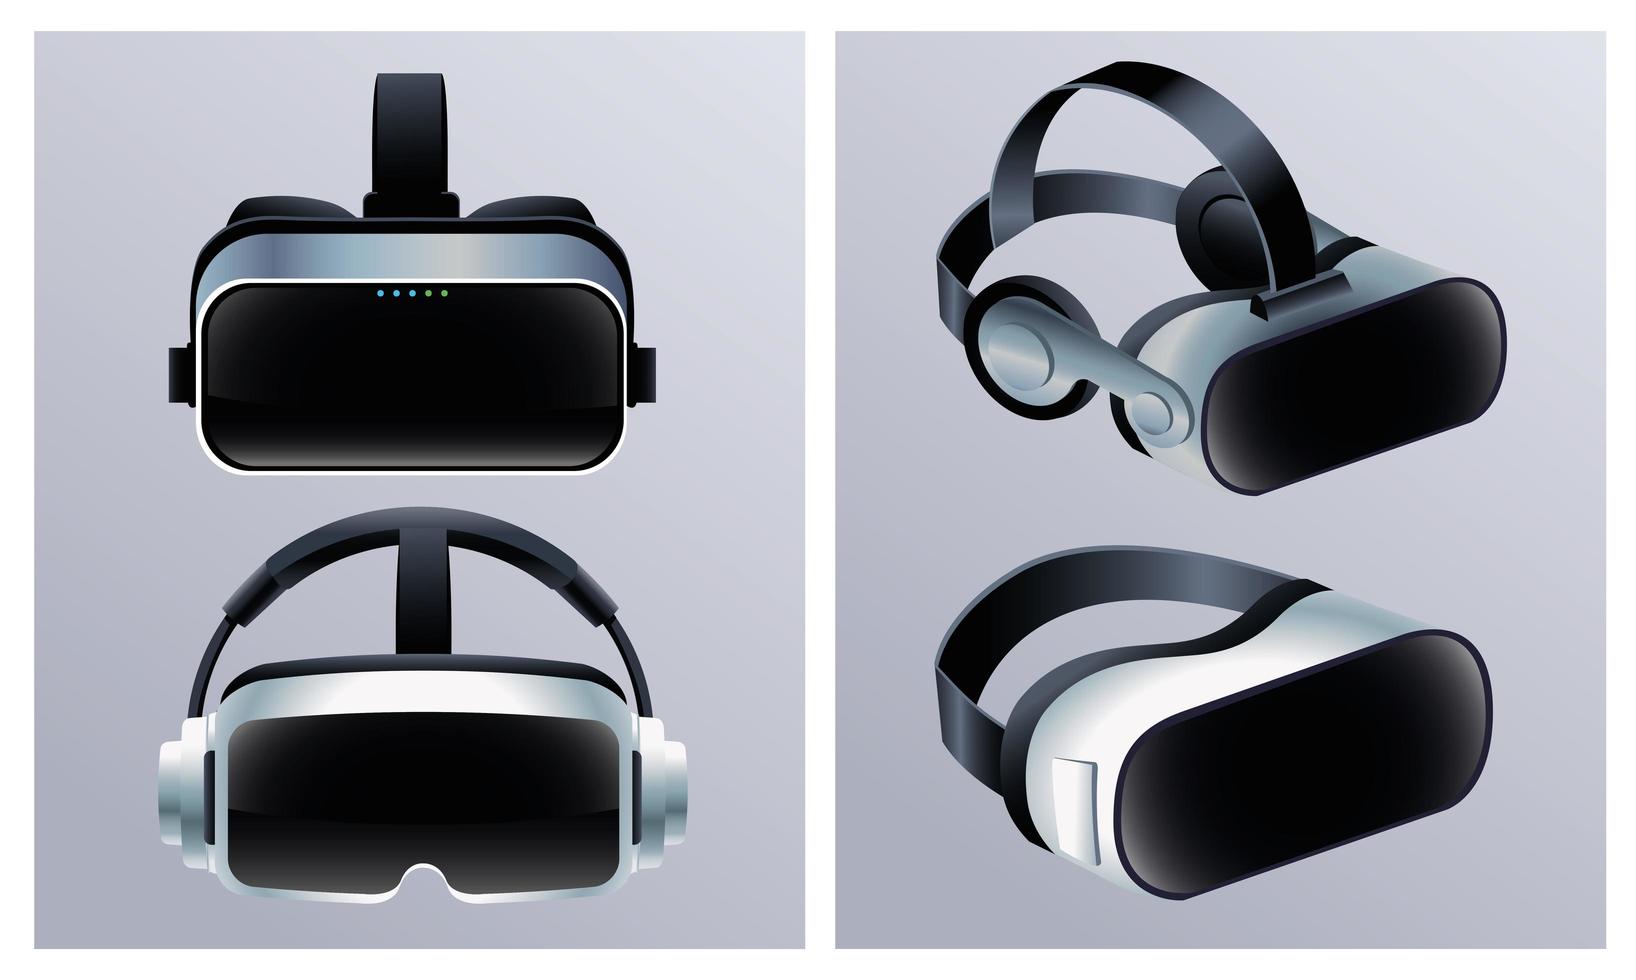 vier virtual reality-maskersaccessoires met grijze achtergrond vector